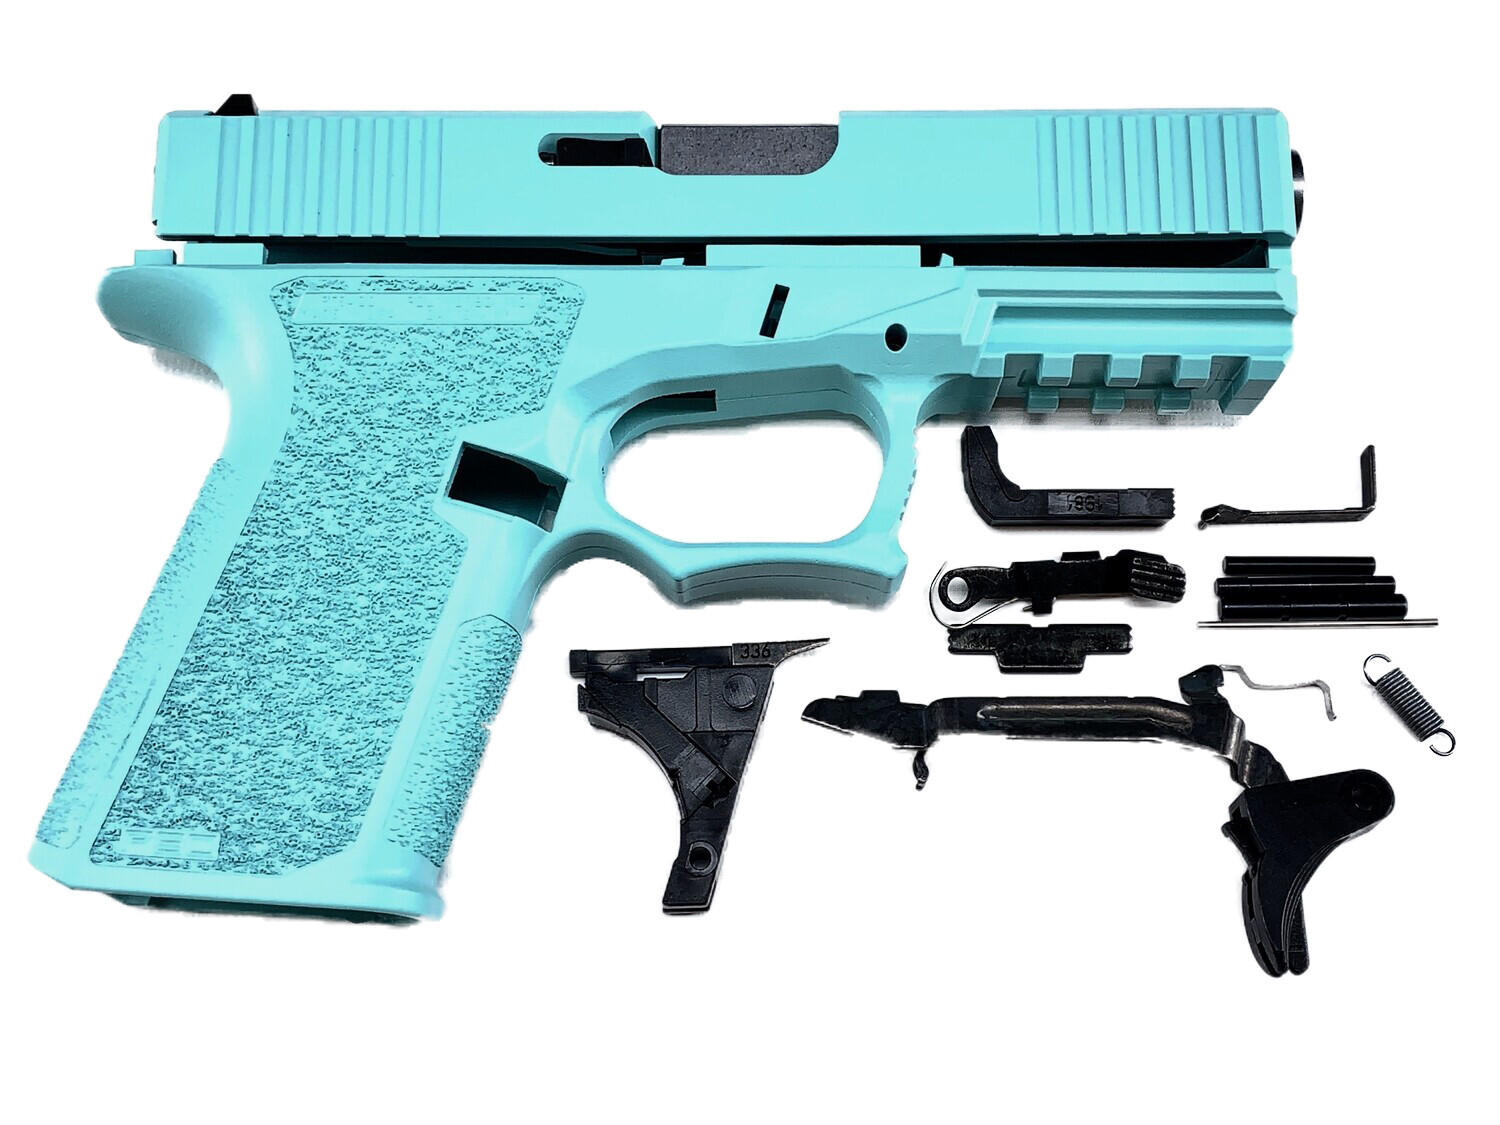 Patriot G19 80% Pistol Build Kit 9mm - Polymer80 PF940C - Robins Egg Tiffany Blue - FRAME NOT INCLUDED